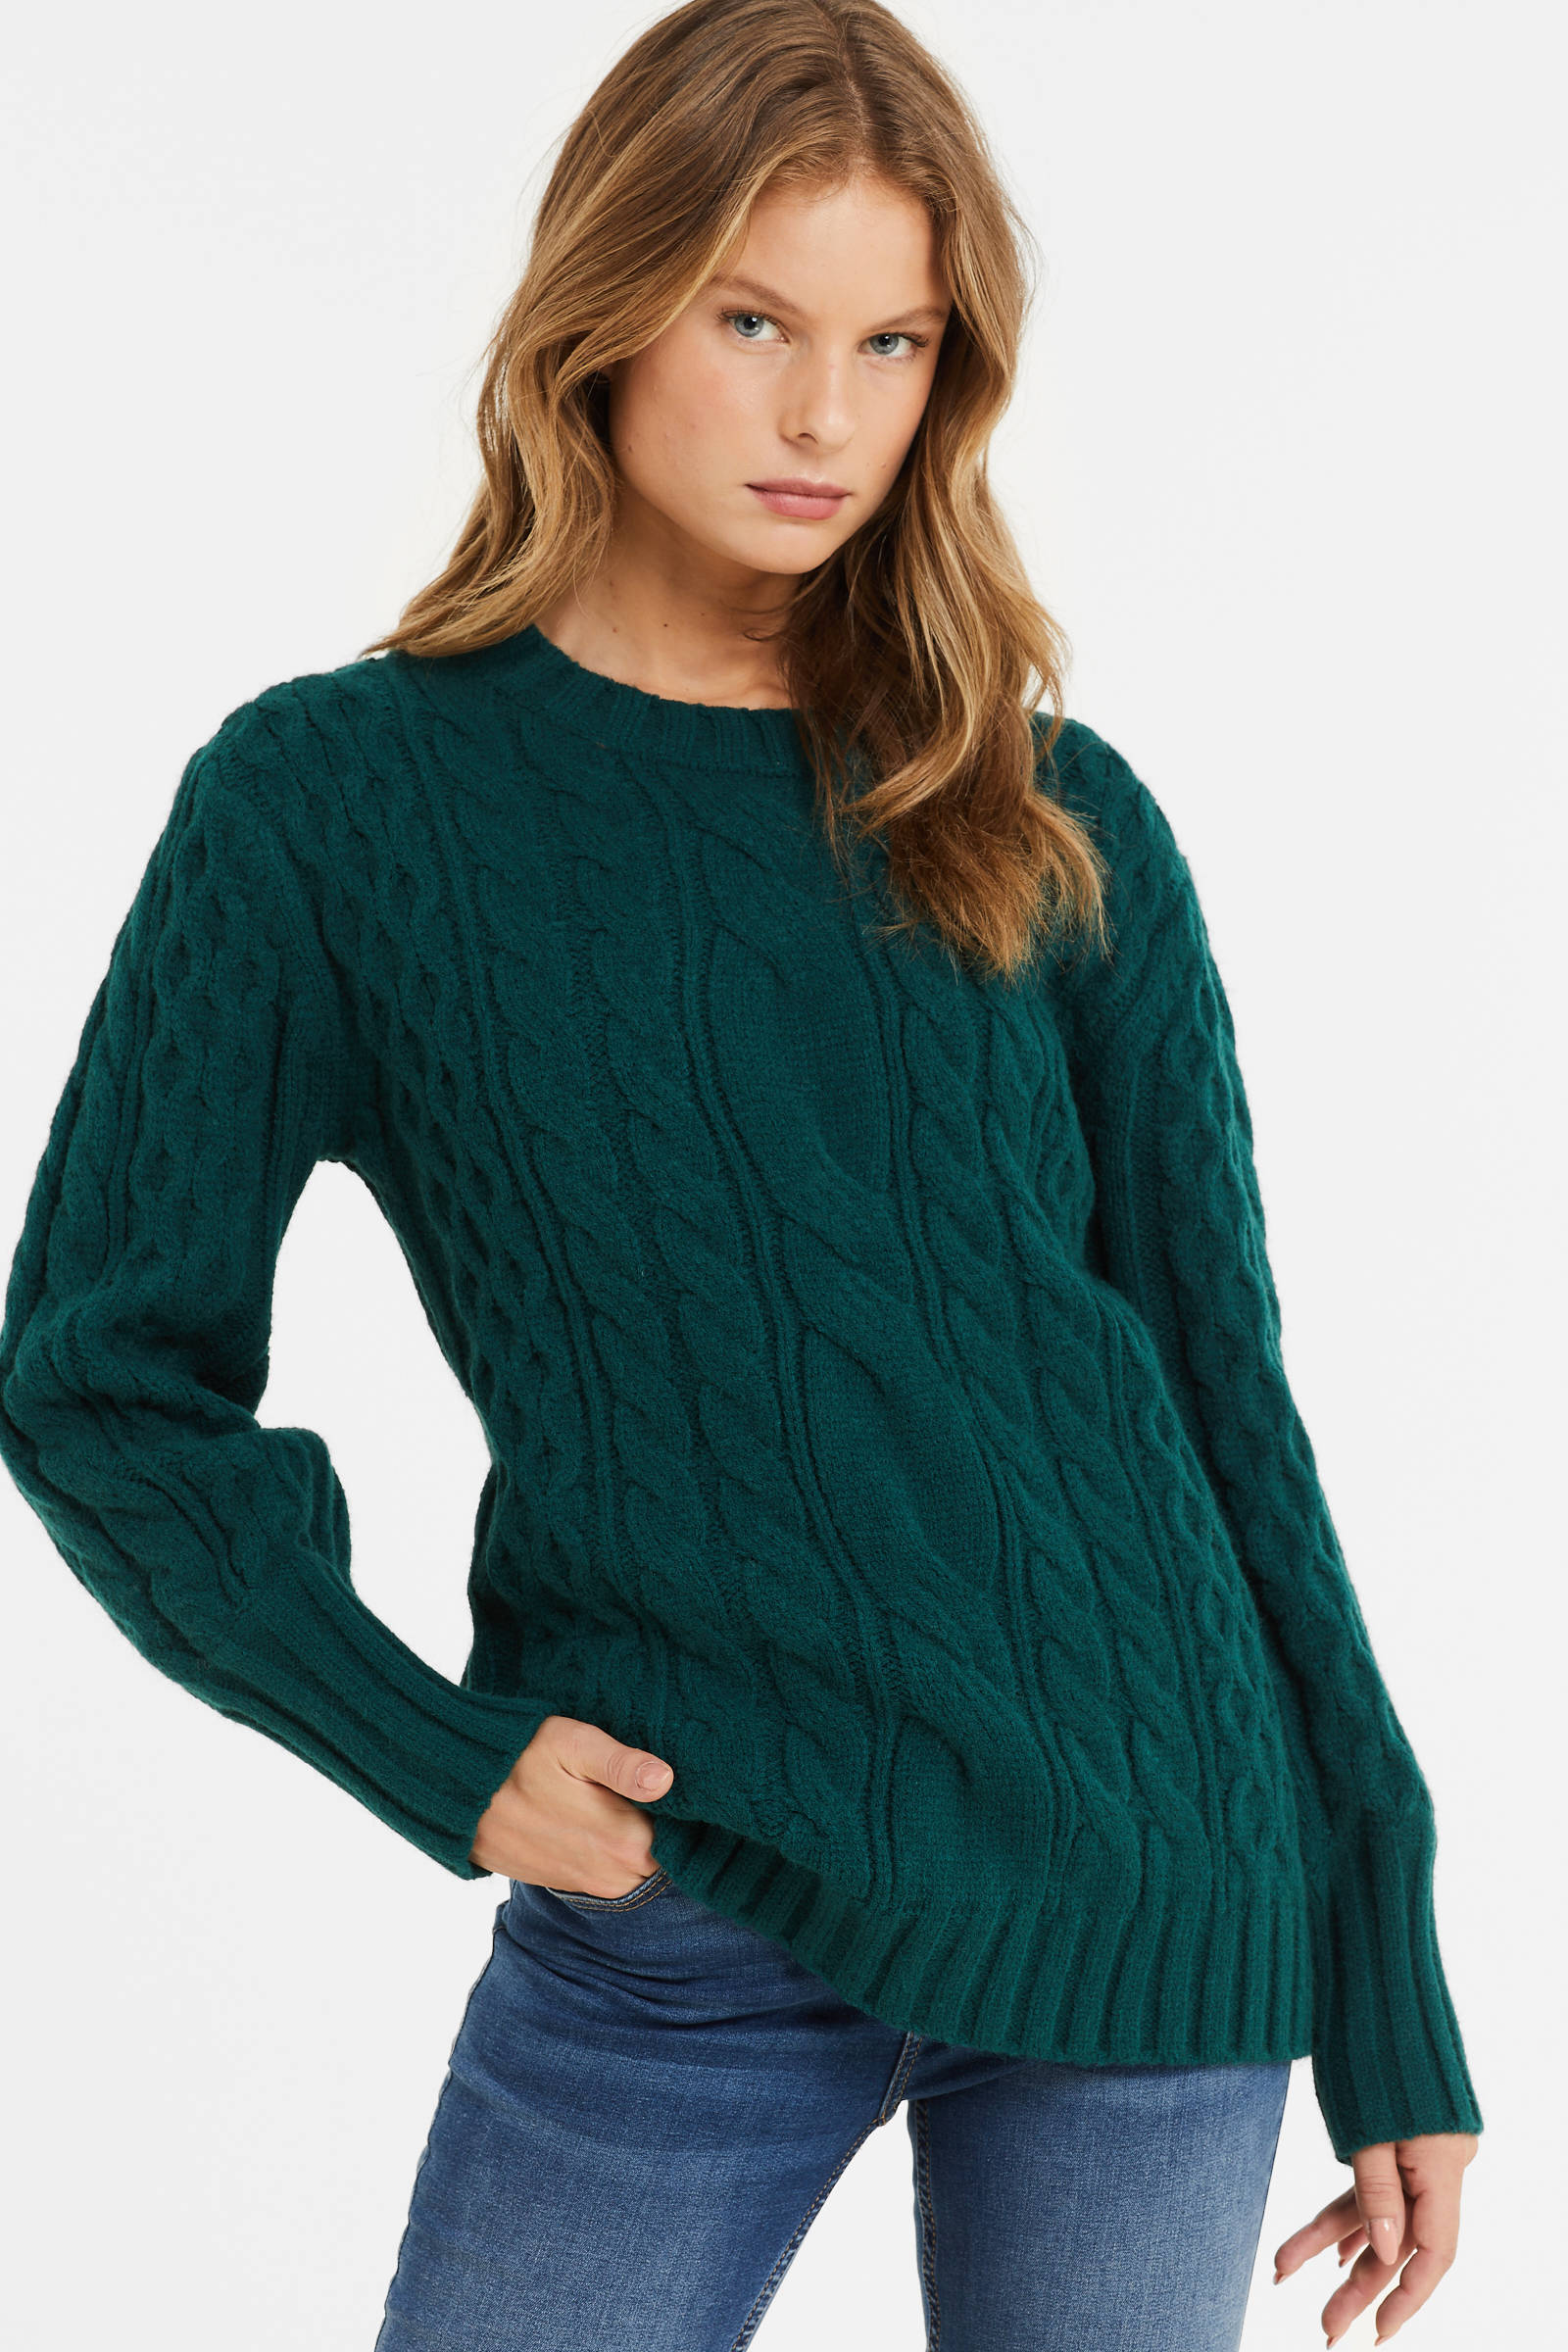 Kleding Dameskleding Sweaters Pullovers Bubbles & kabels trui. 